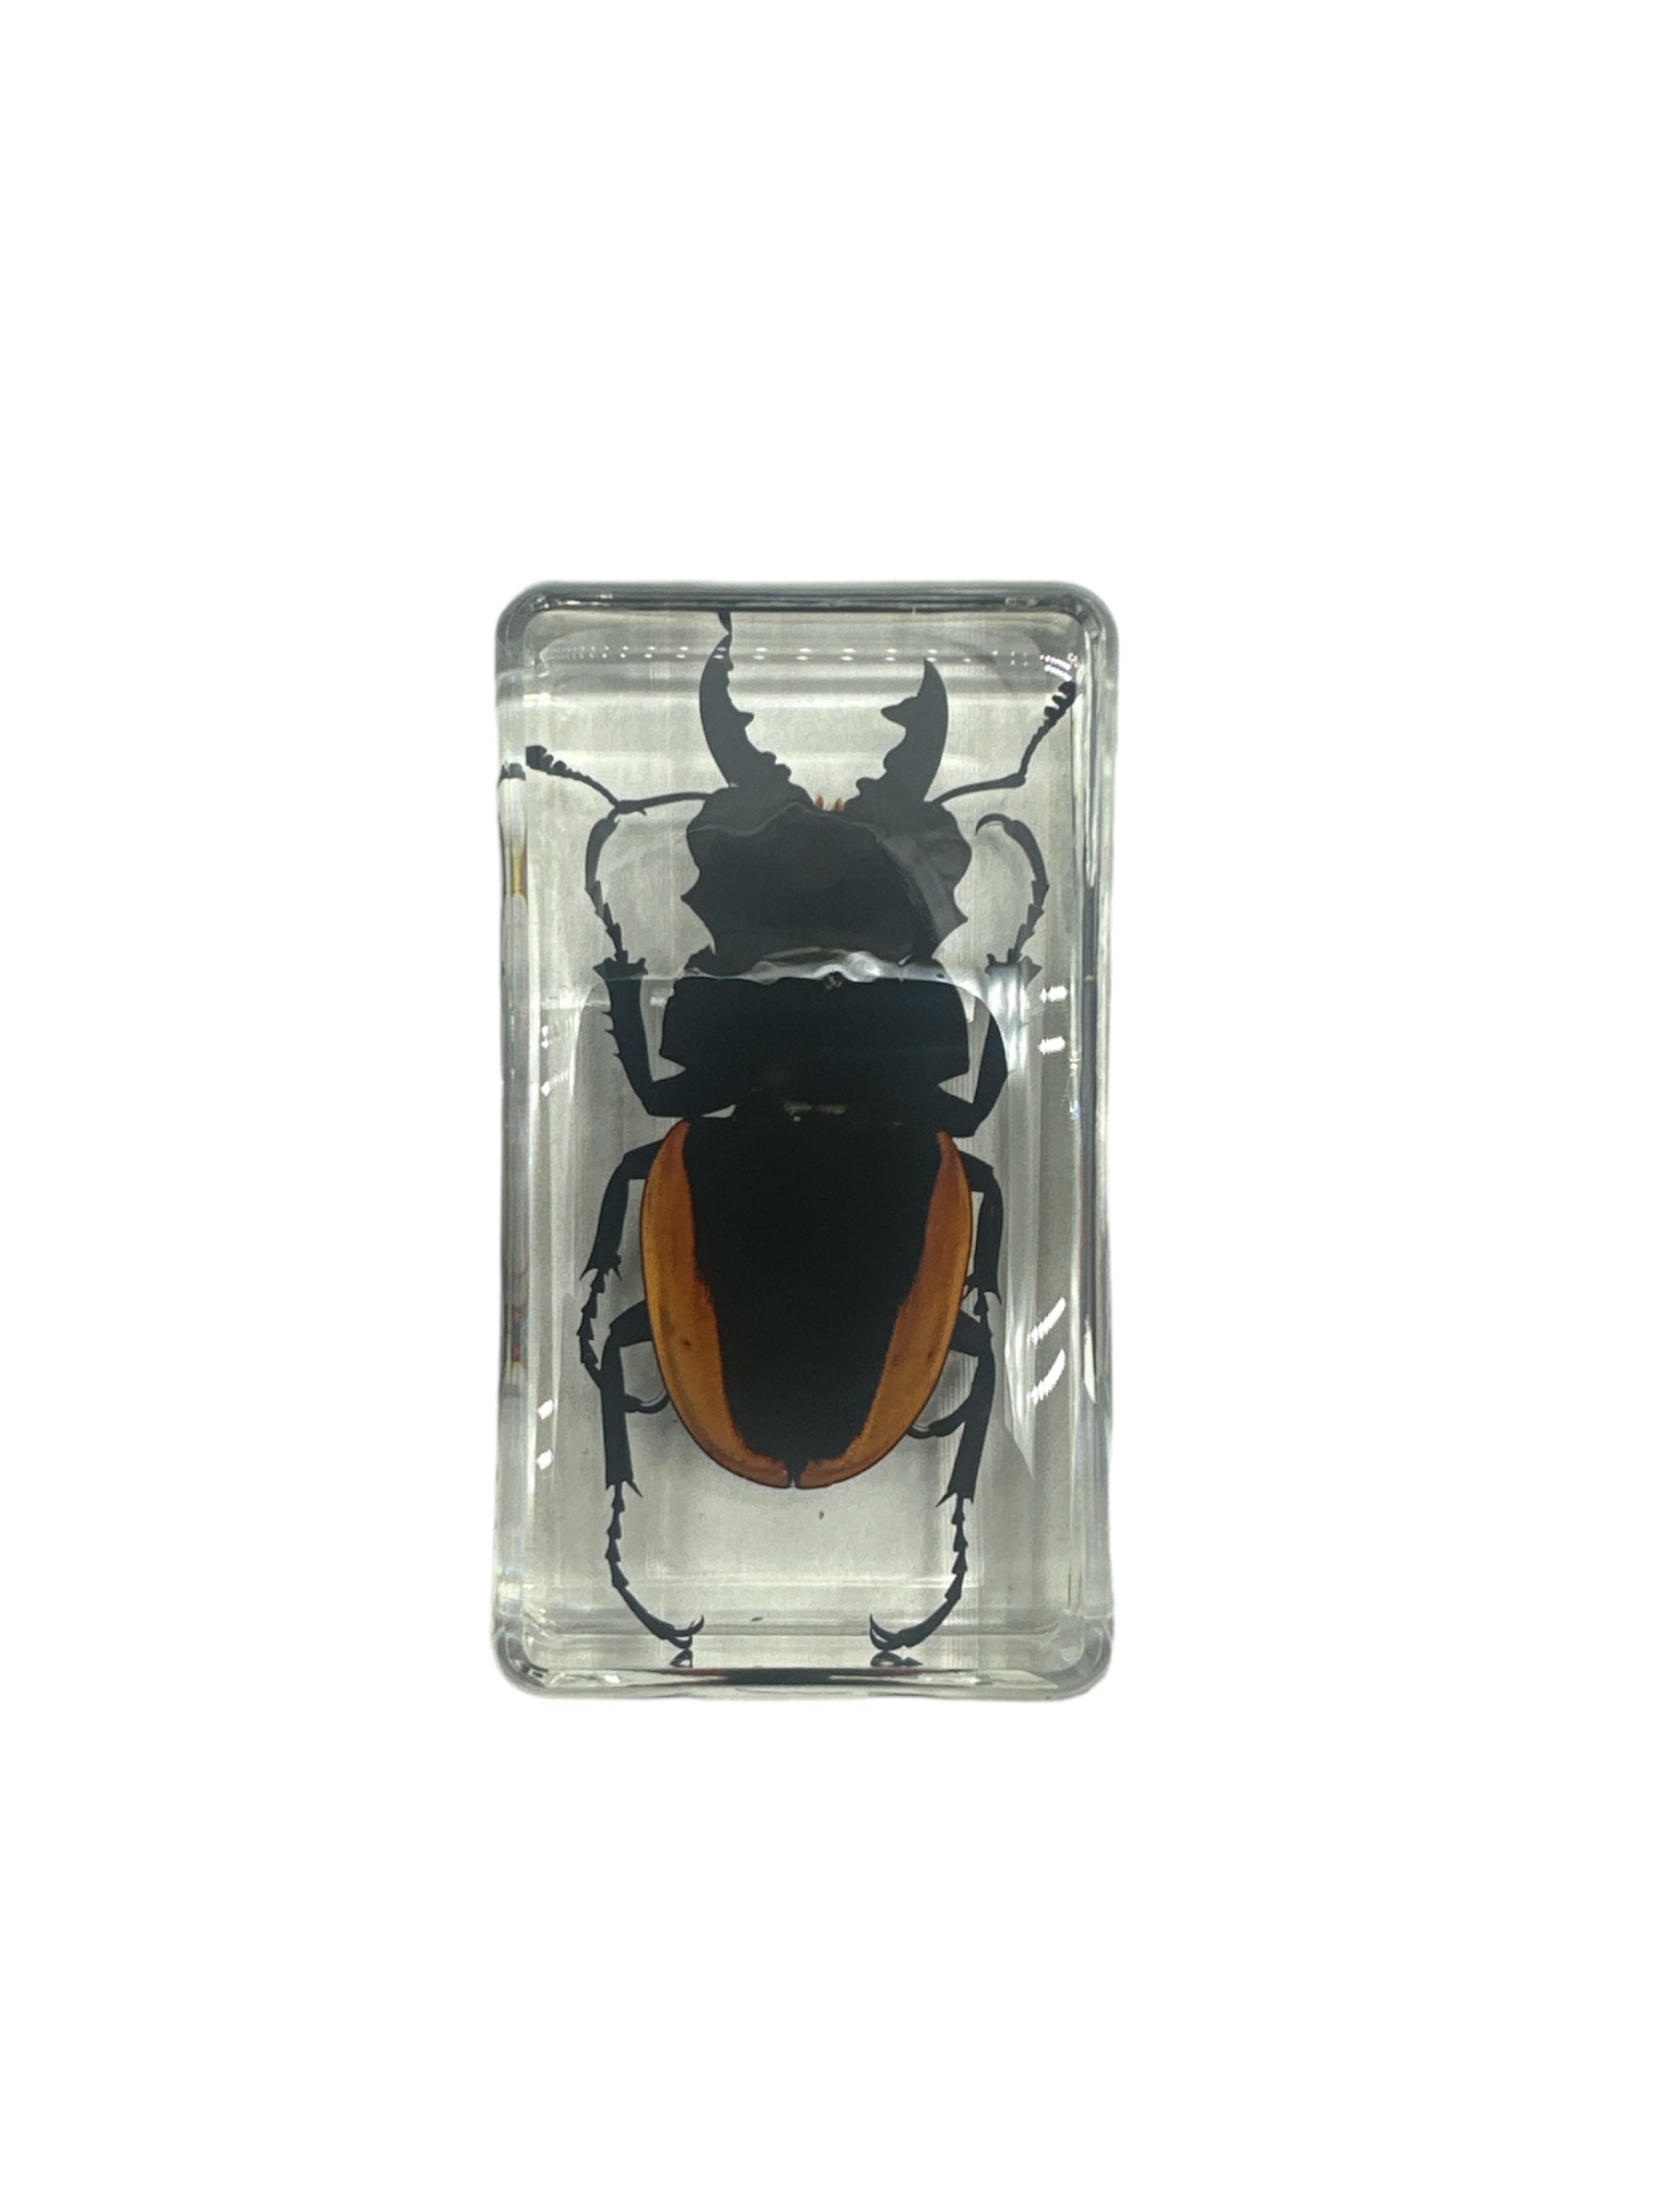 Golden Stag Beetle - Specimen In Resin